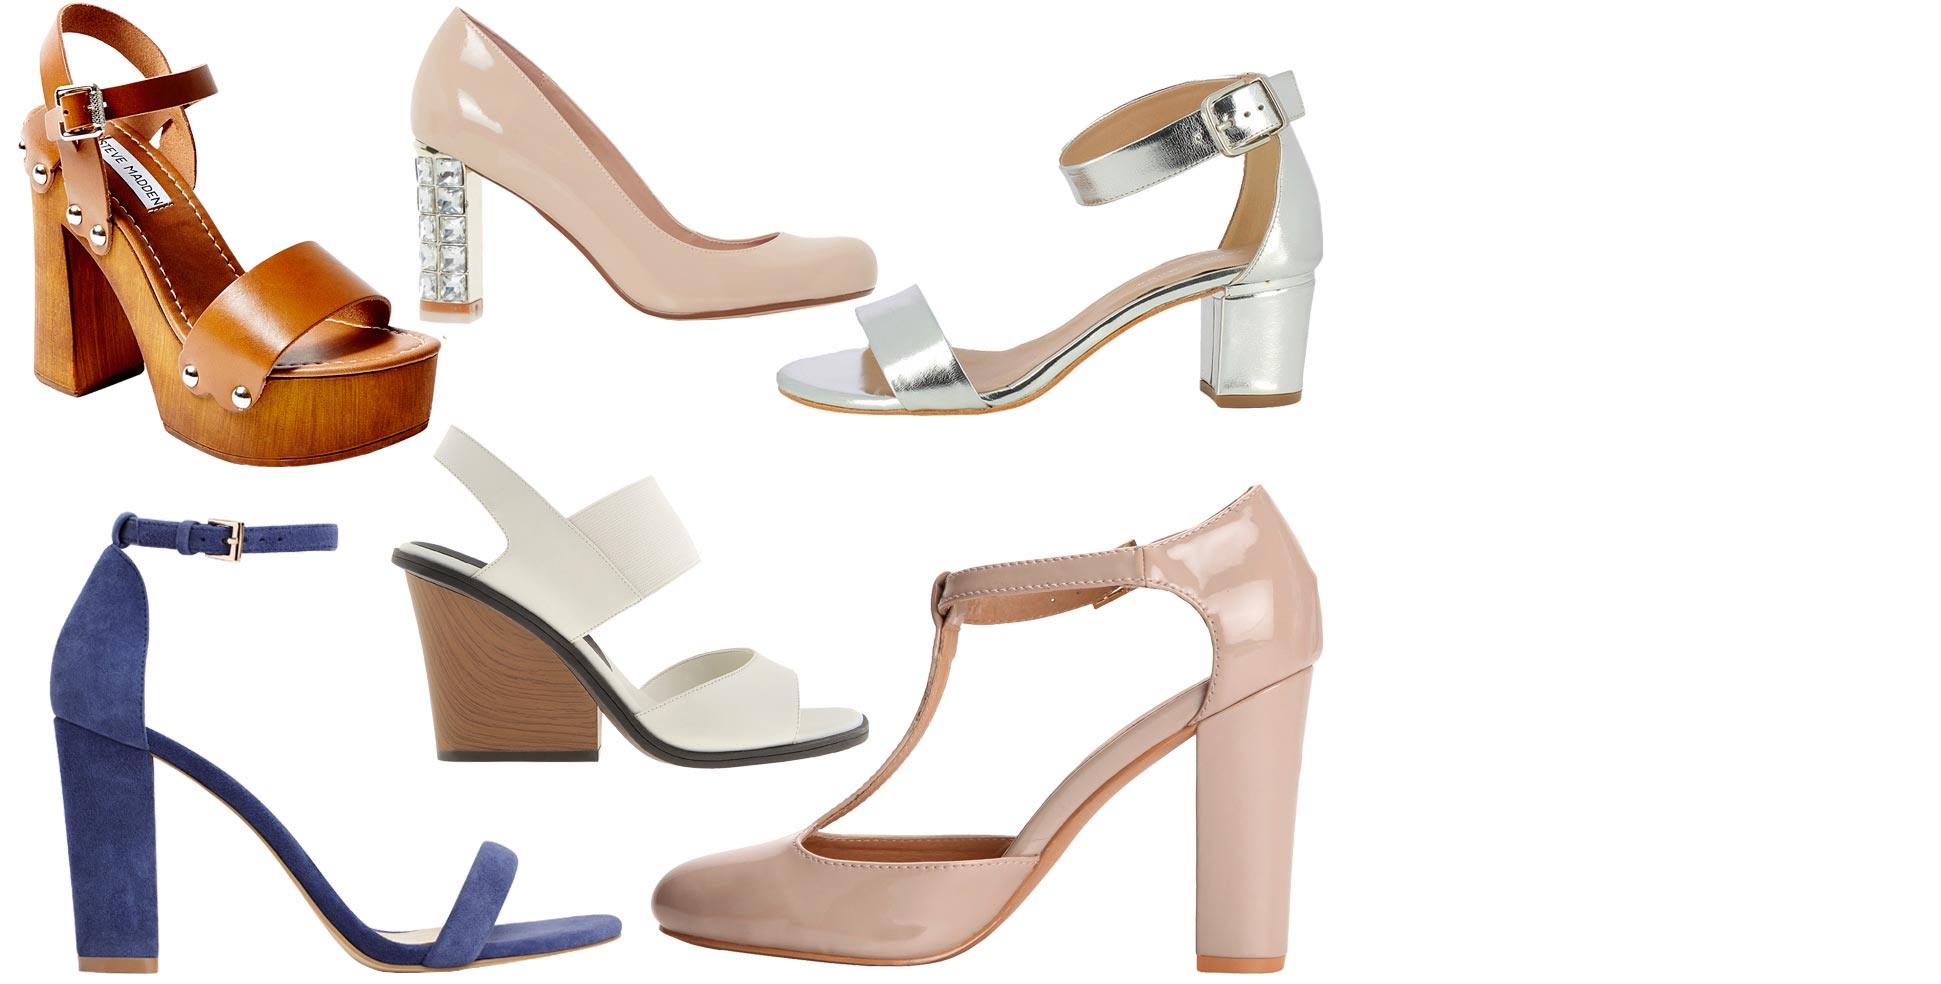 The best pair of block heels to buy right now - Femina.in | Femina.in